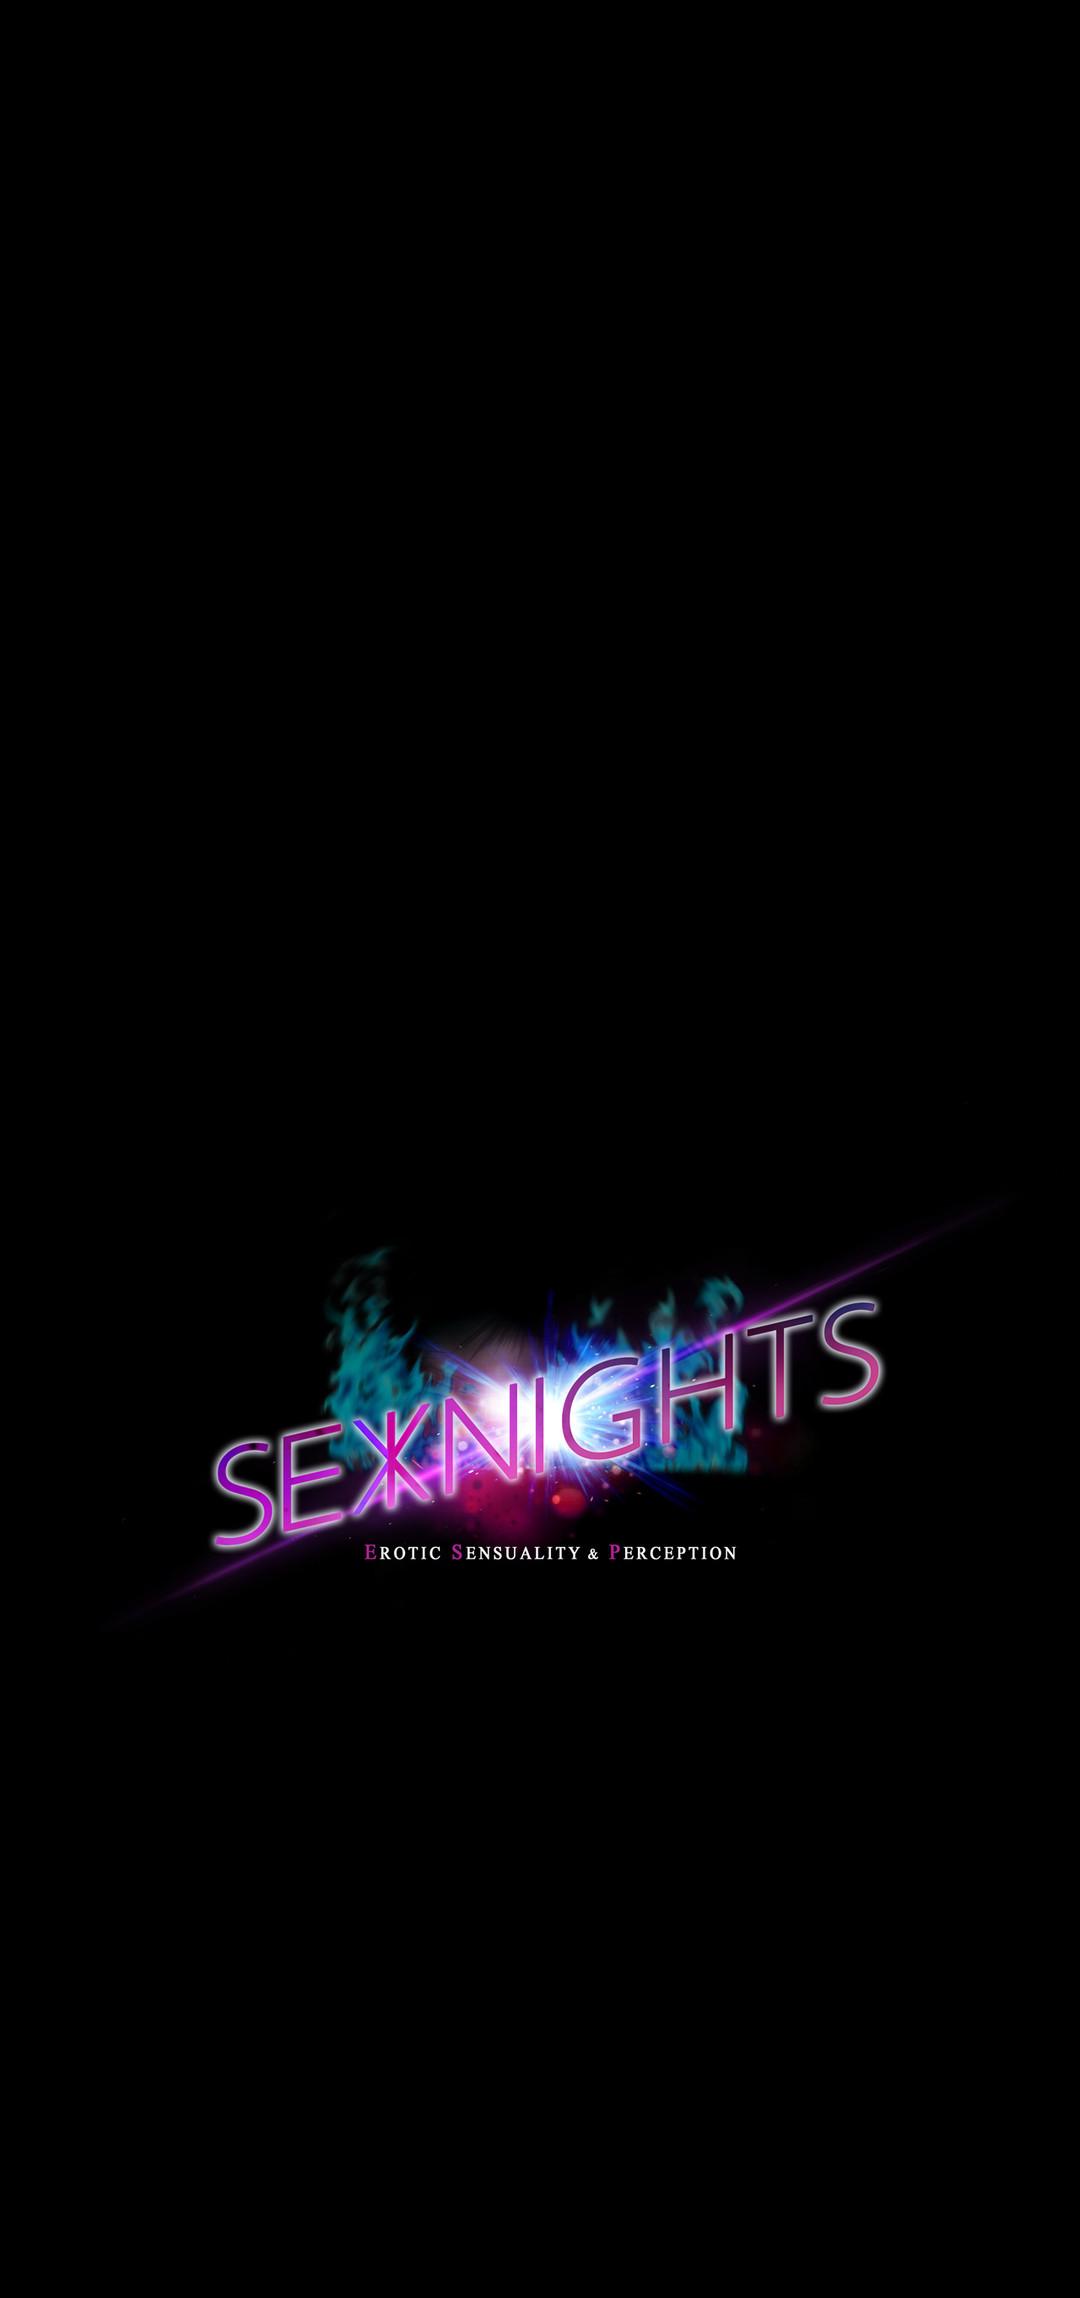 [BYMAN] Sex Knights-Erotic Sensuality & Perception Ch.1-16 (English) (Ongoing) 254